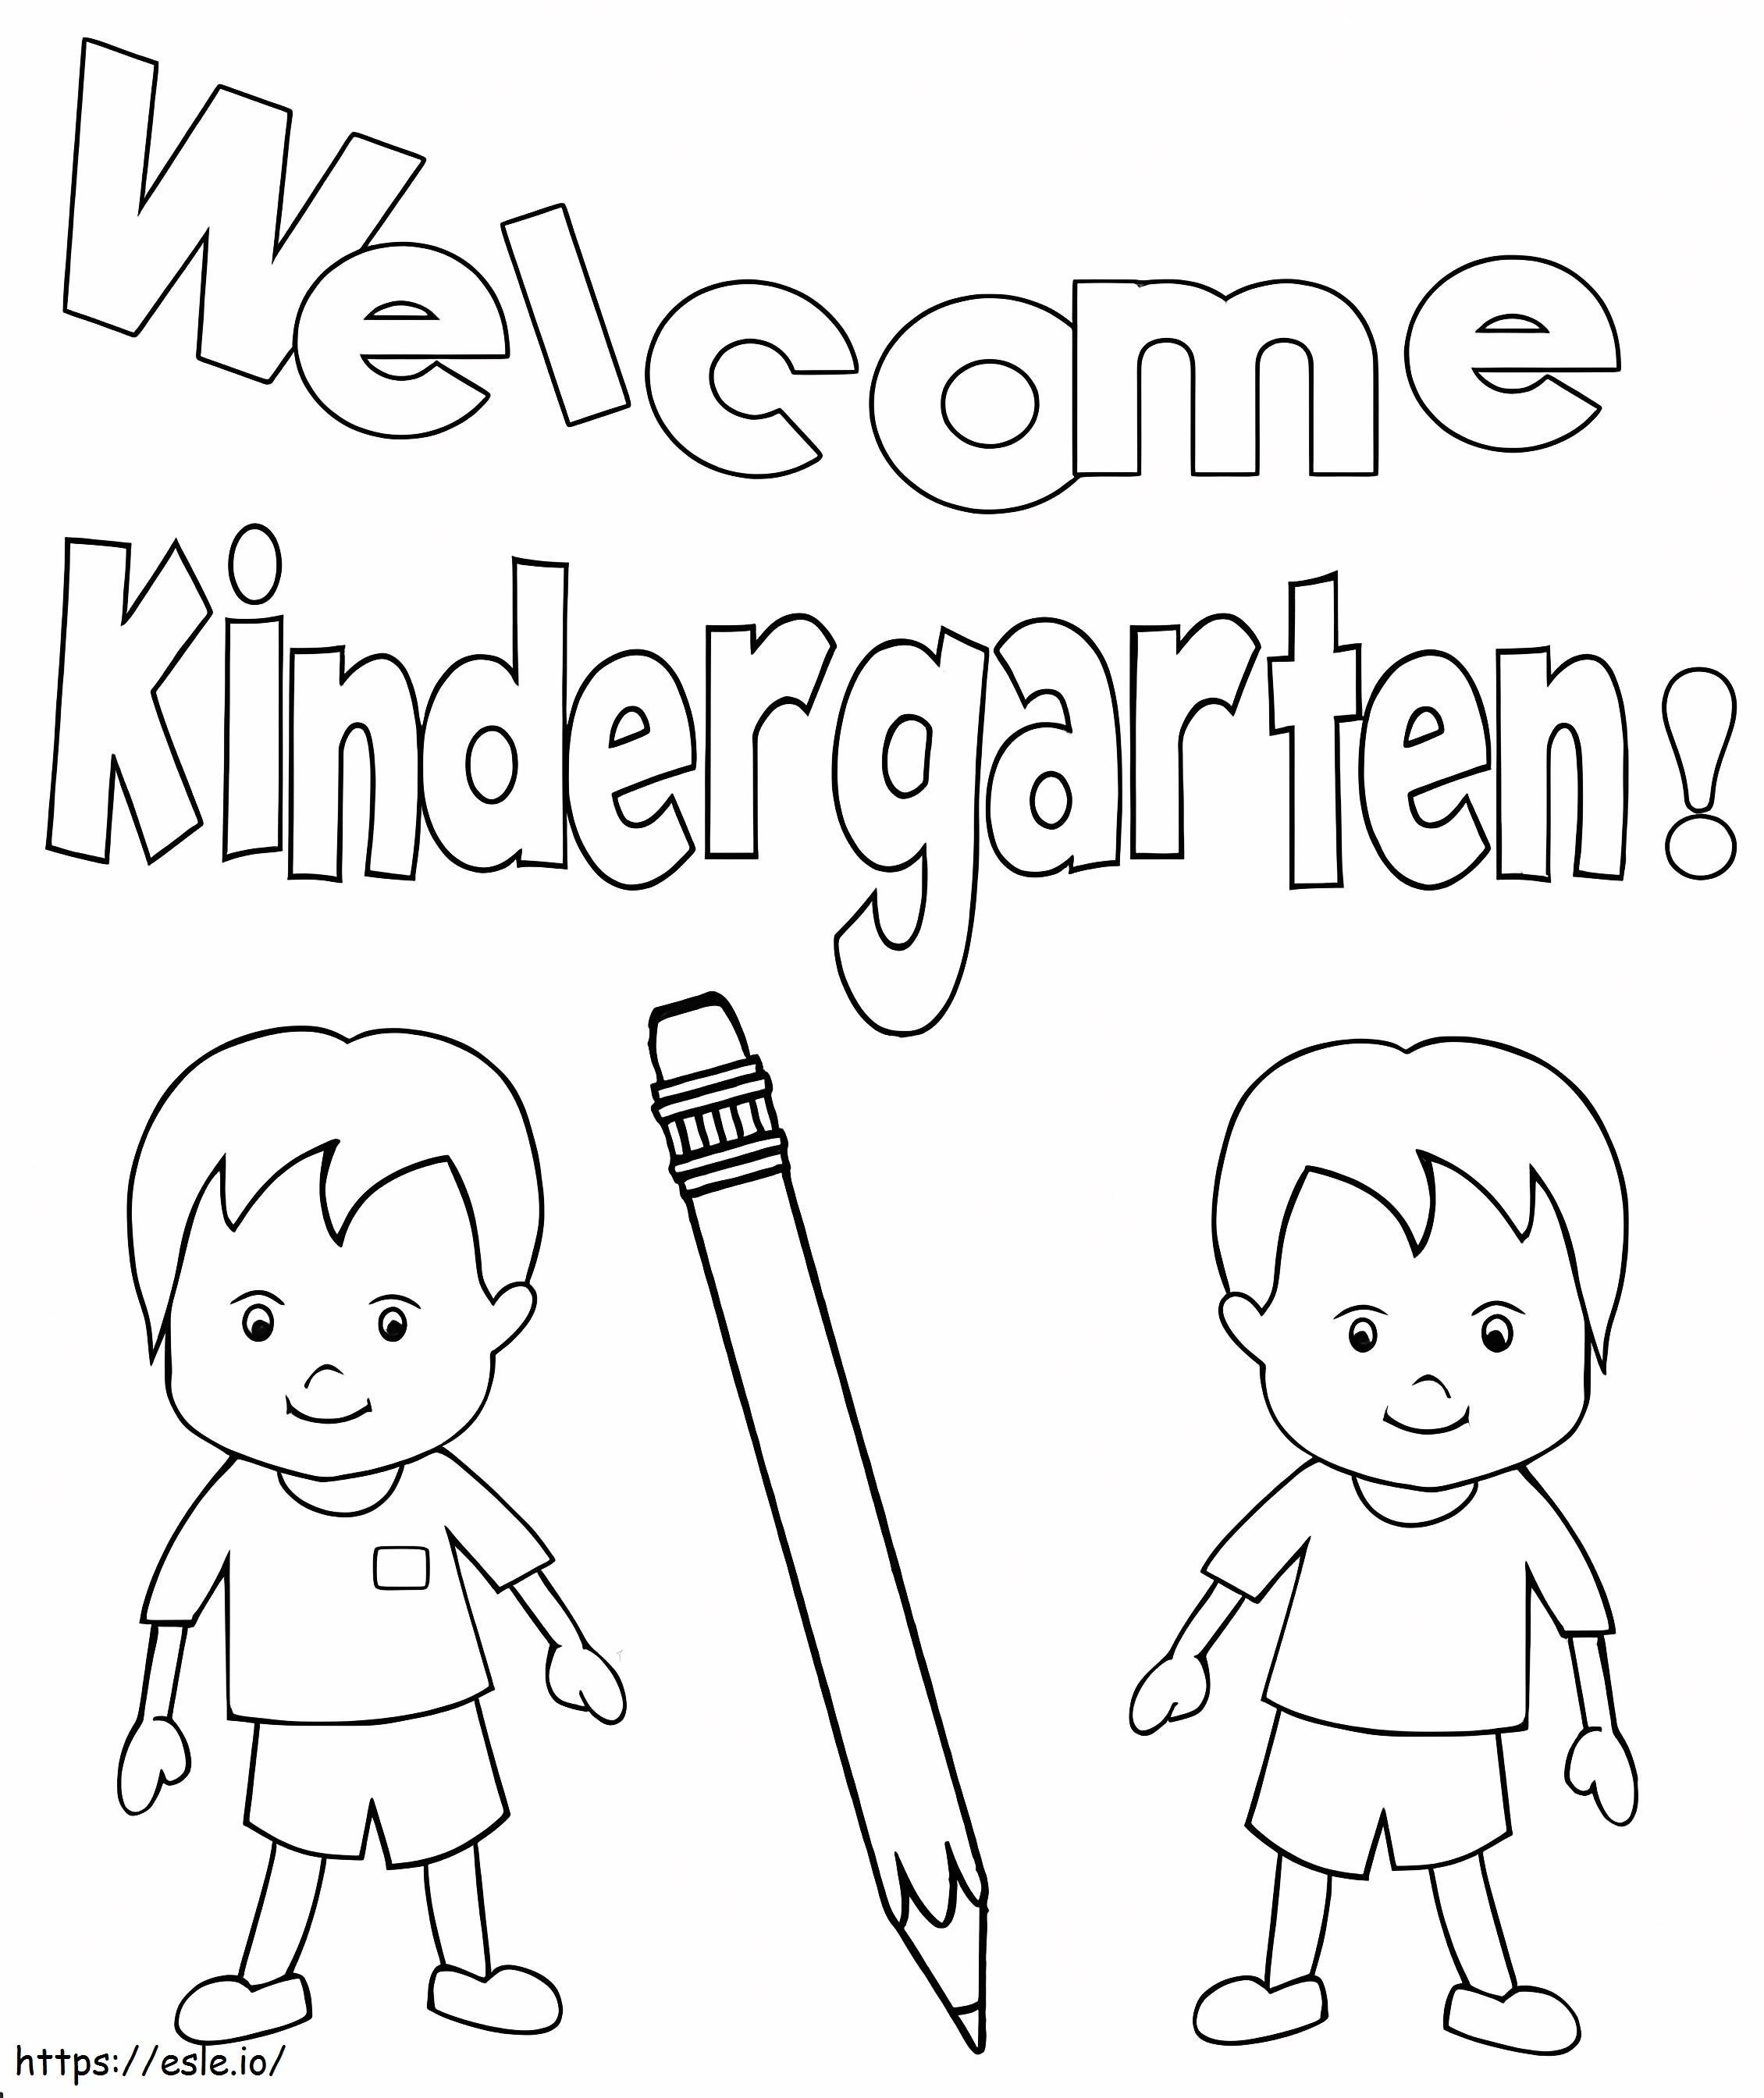 Kindergarten coloring page